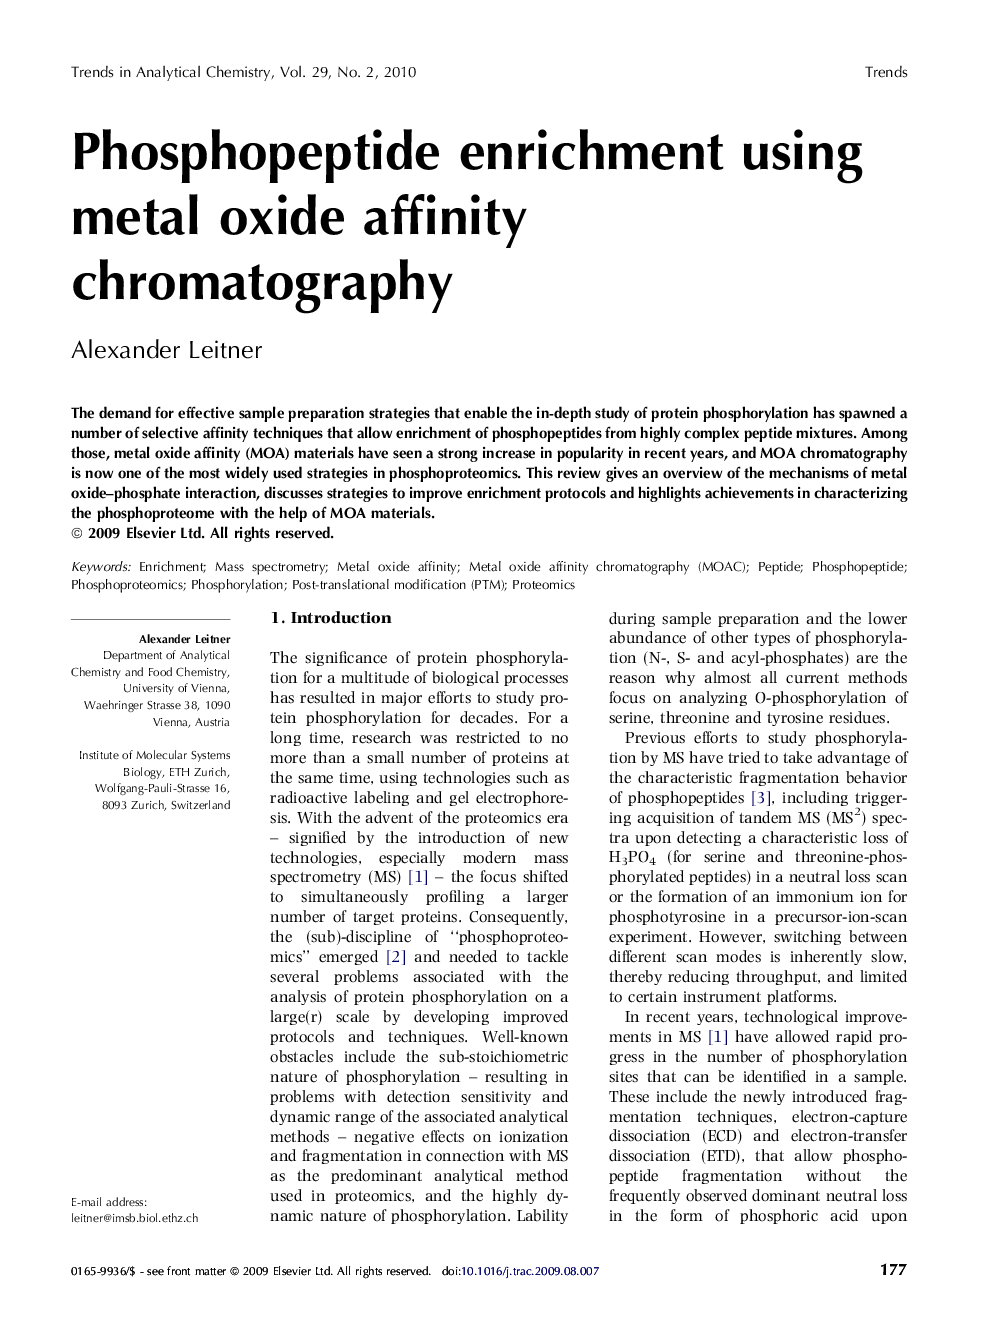 Phosphopeptide enrichment using metal oxide affinity chromatography